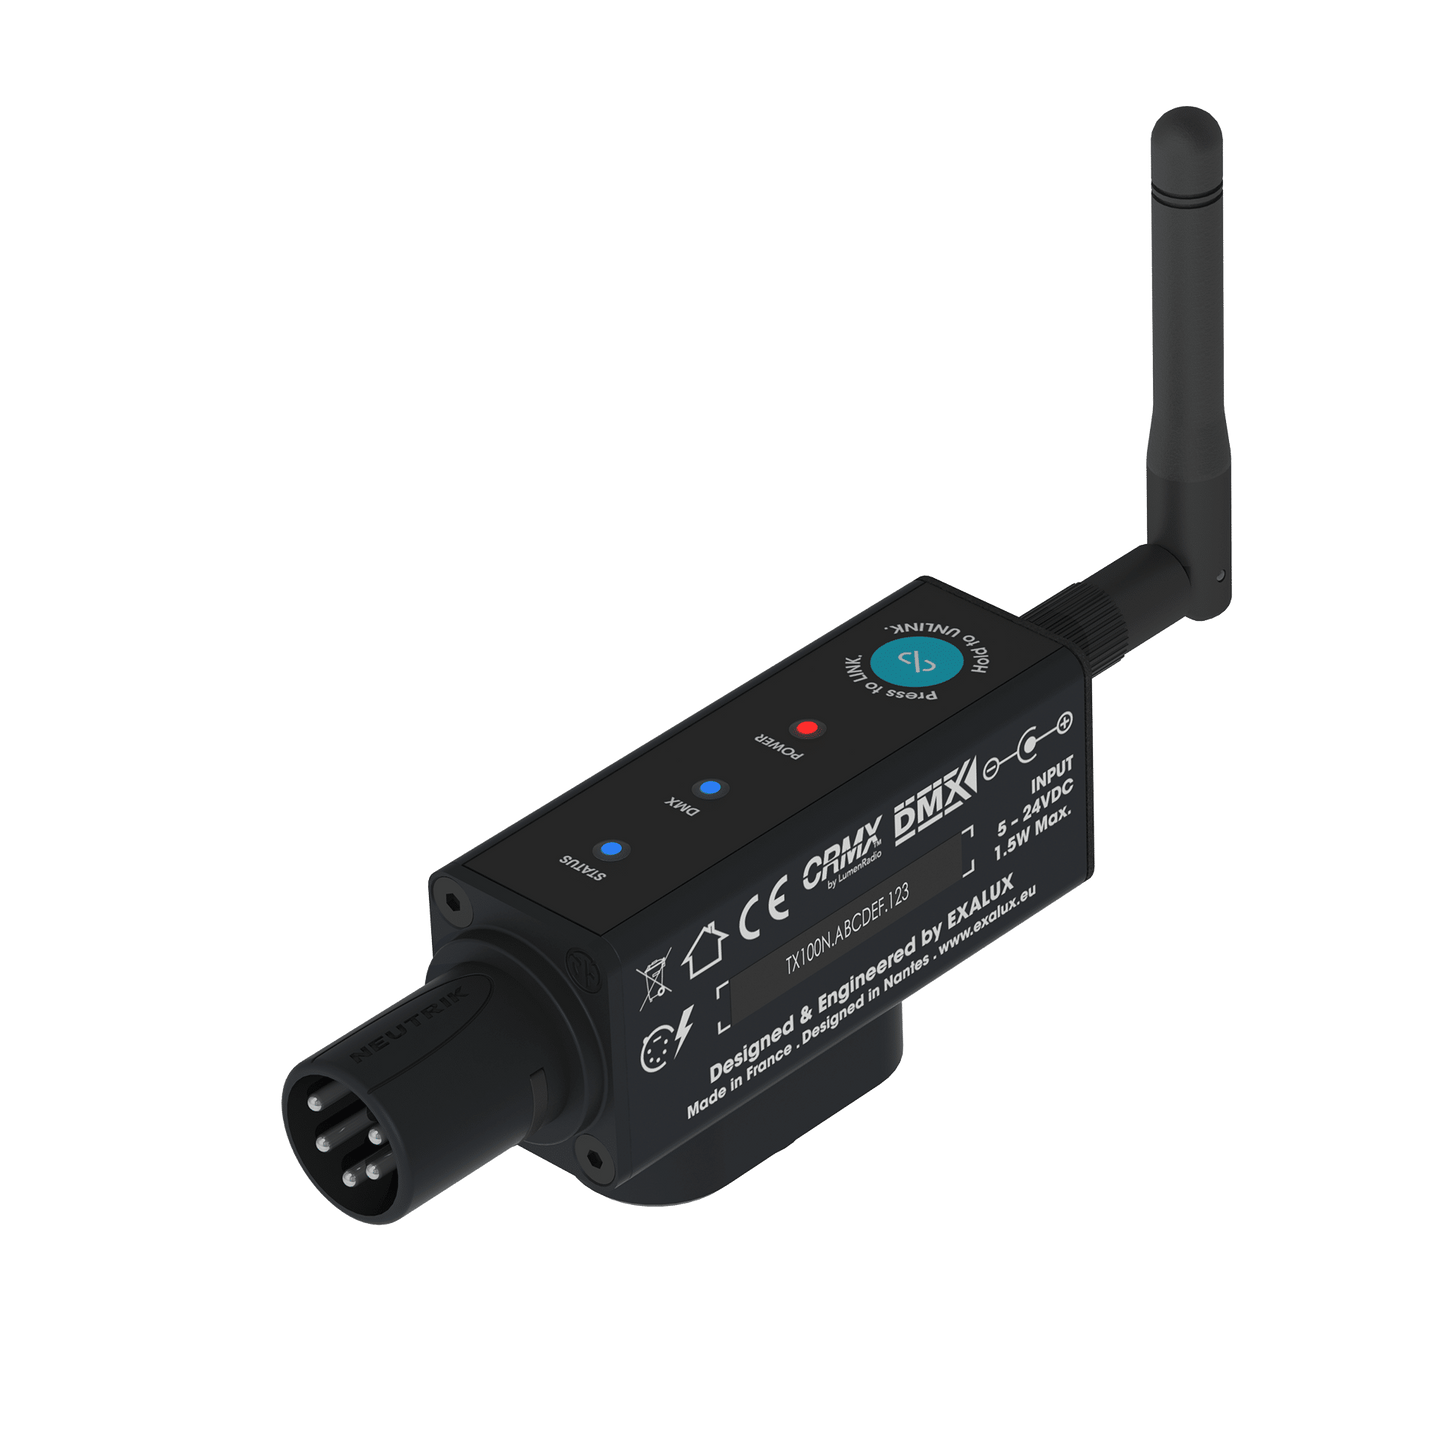 Exalux Connect TX100N Basic Kit